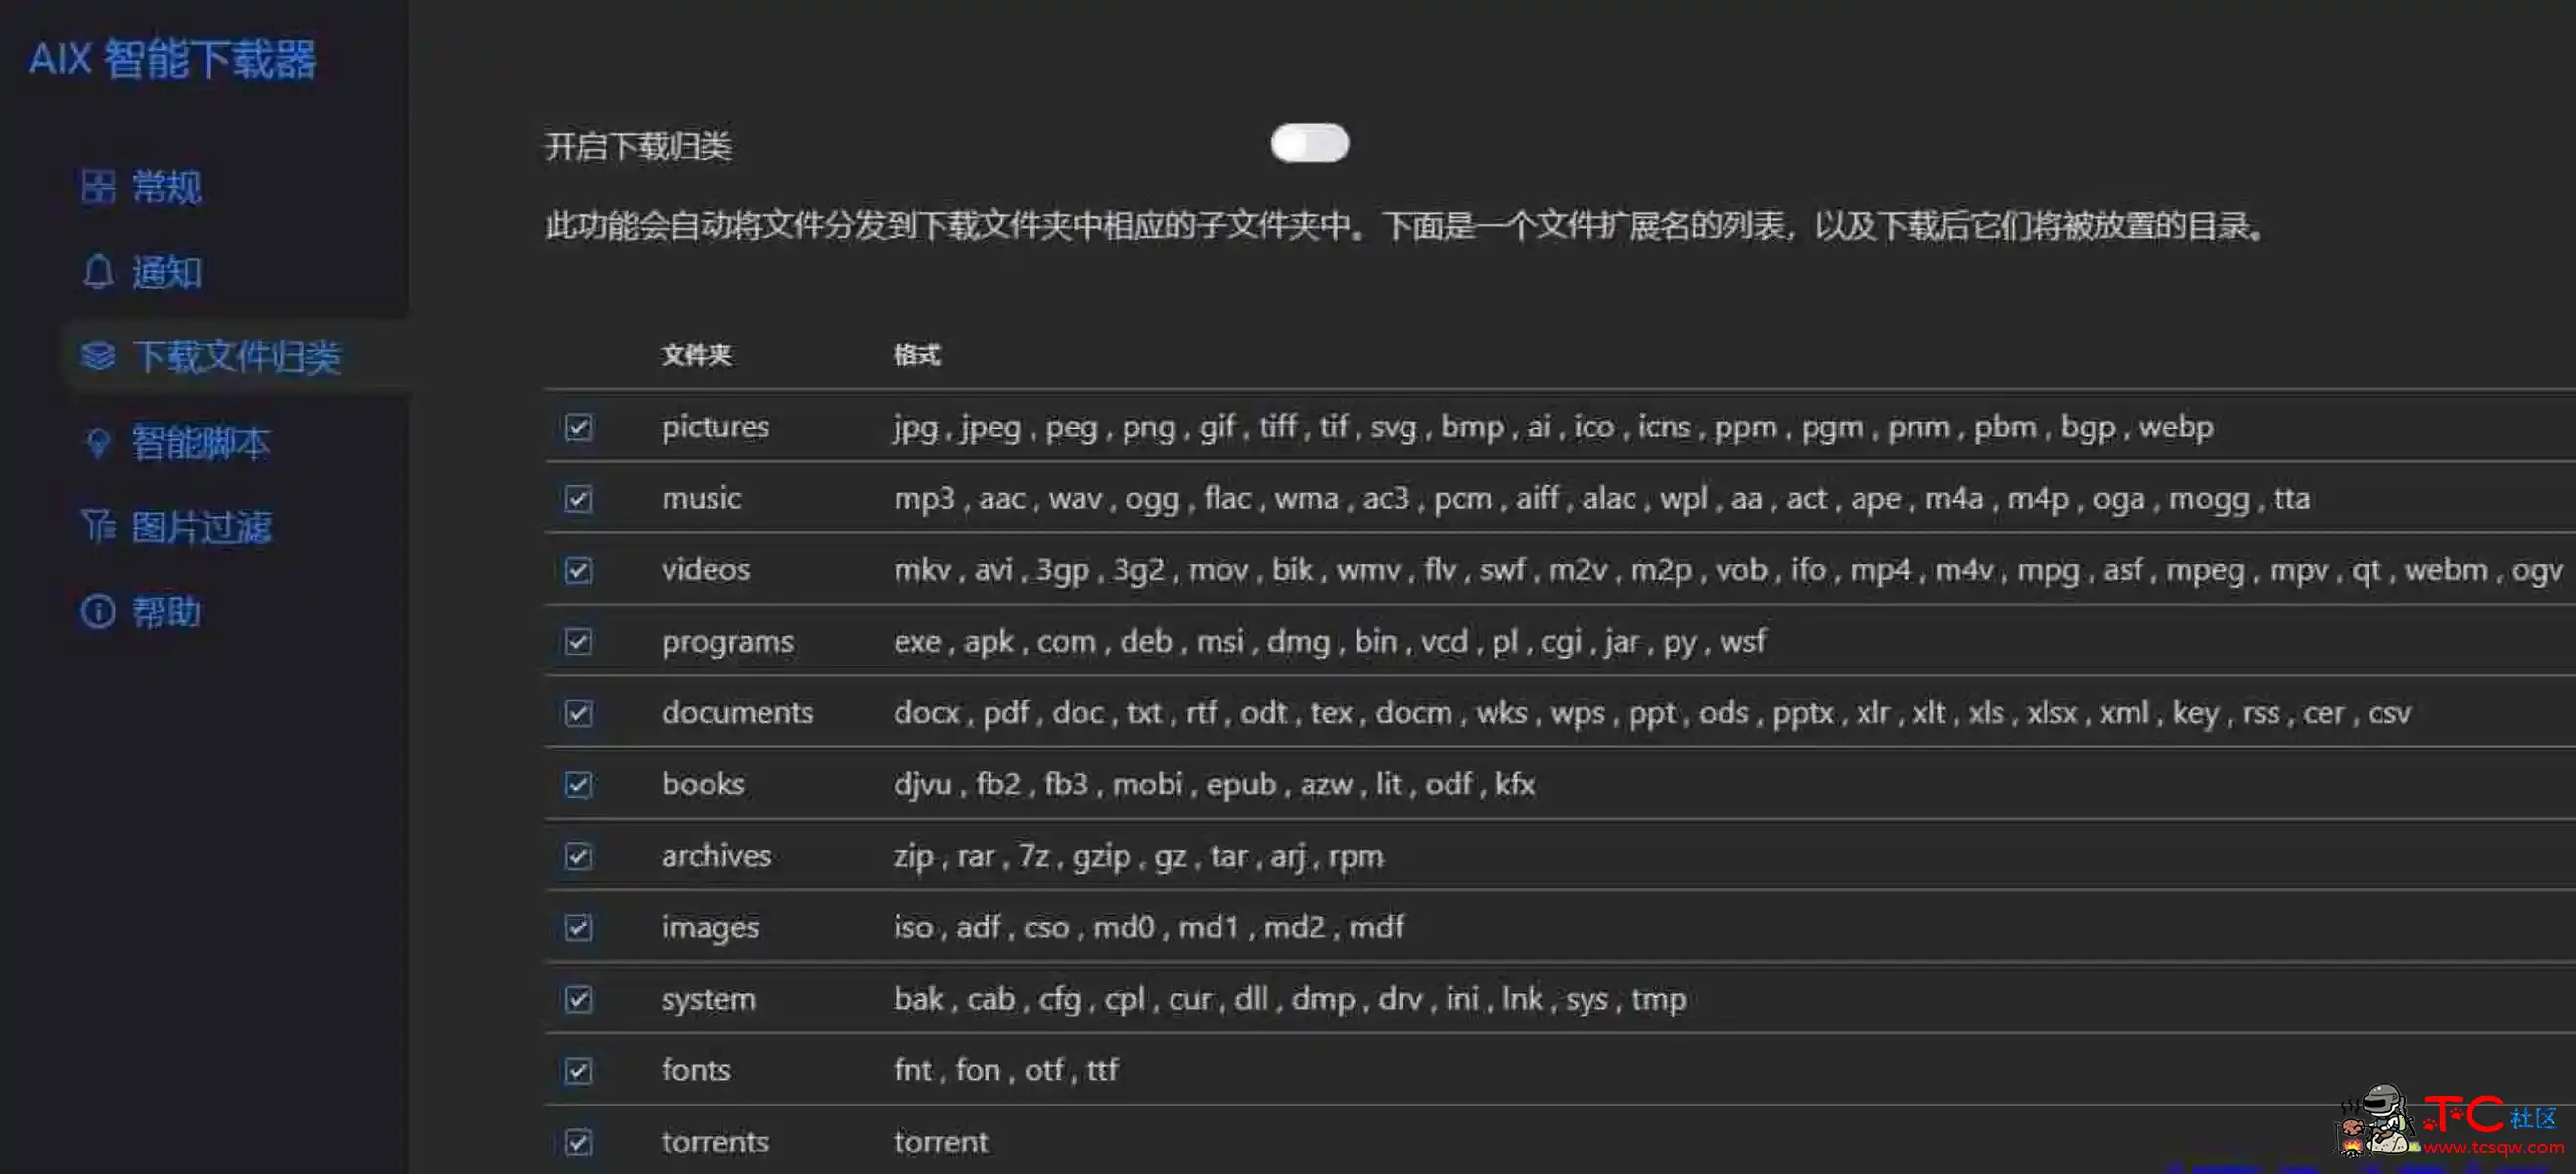 AIX网页嗅探插件可批量下载图片视频音频文档 屠城辅助网www.tcfz1.com5990